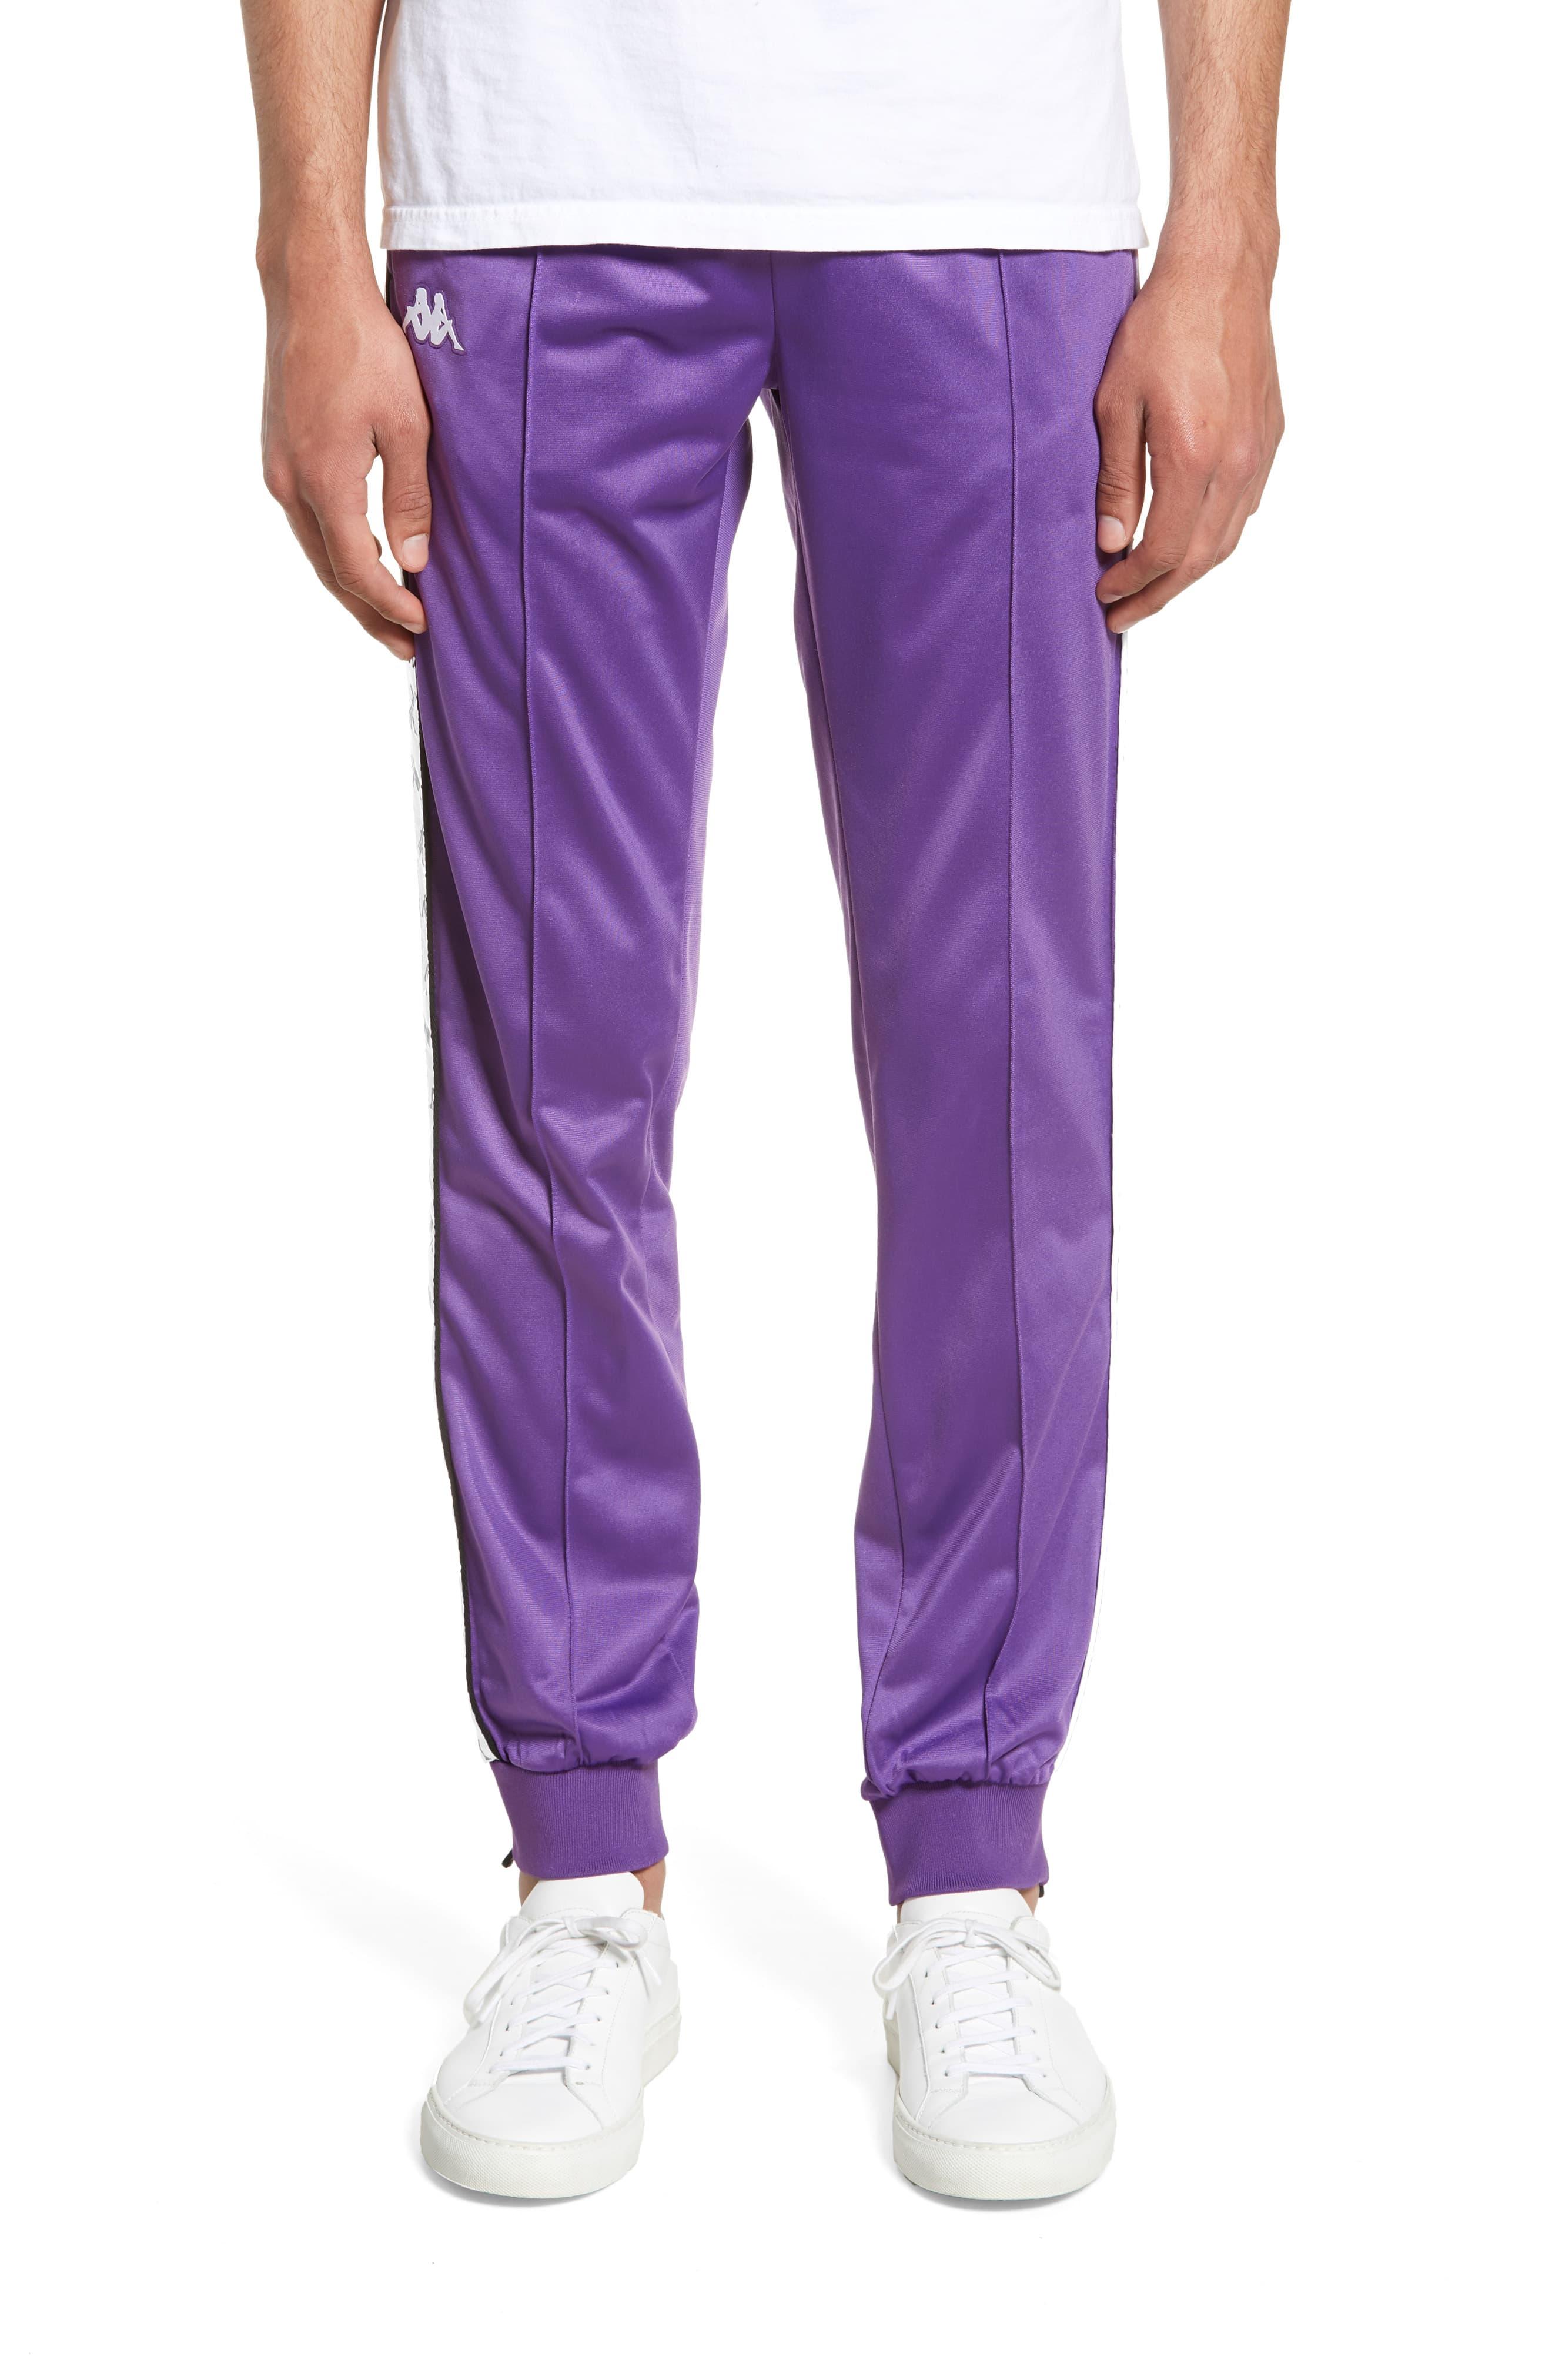 Kappa 222 Banda Rastoriazz Slim Fit Track Pants in Purple for Men - Lyst